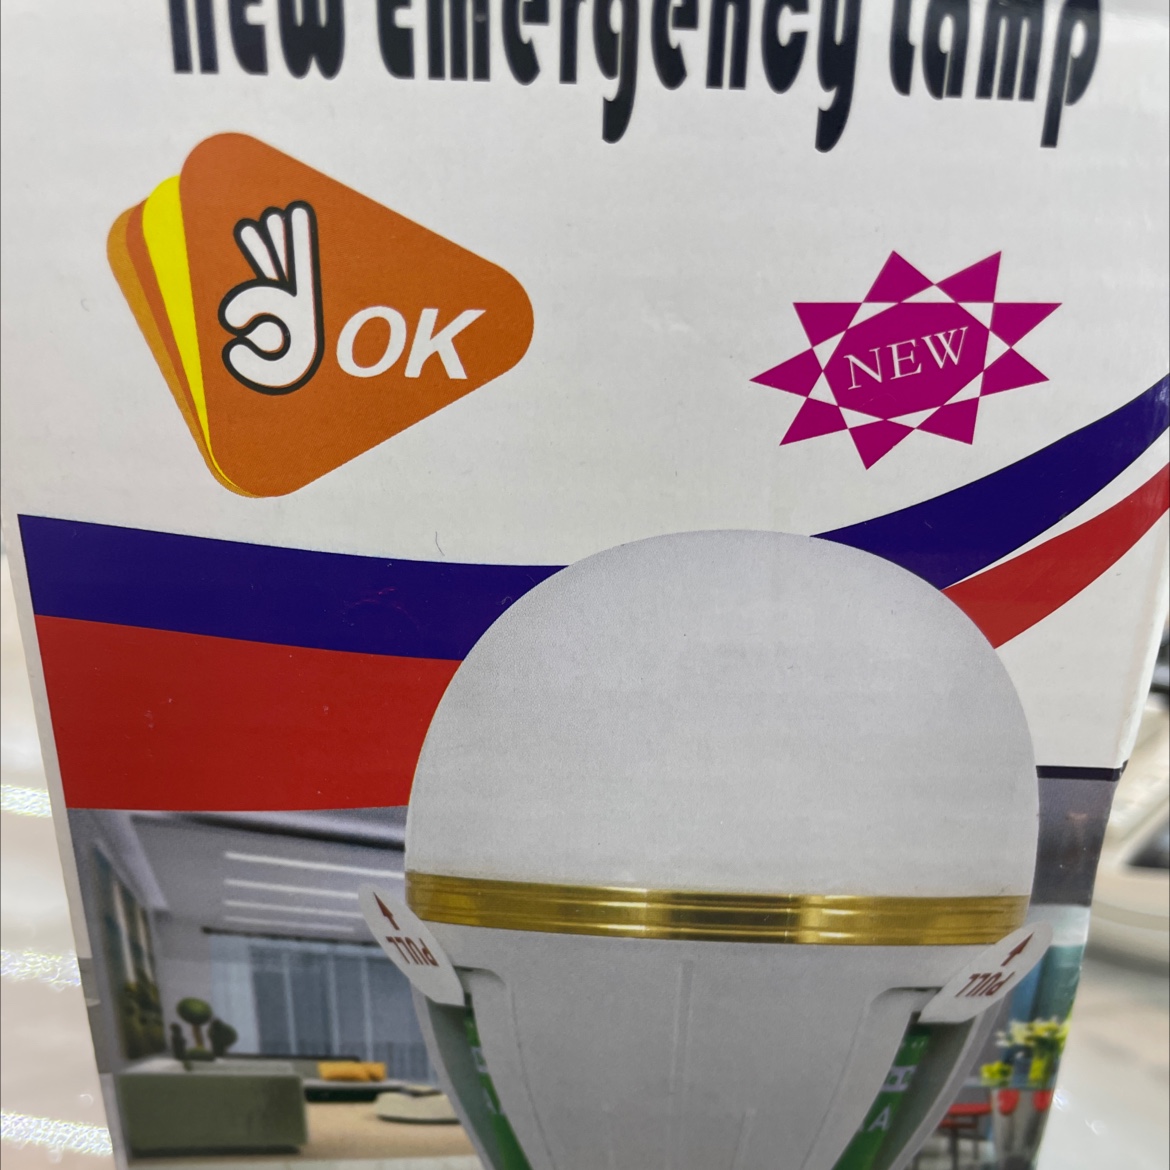 30w new emergency lamp图